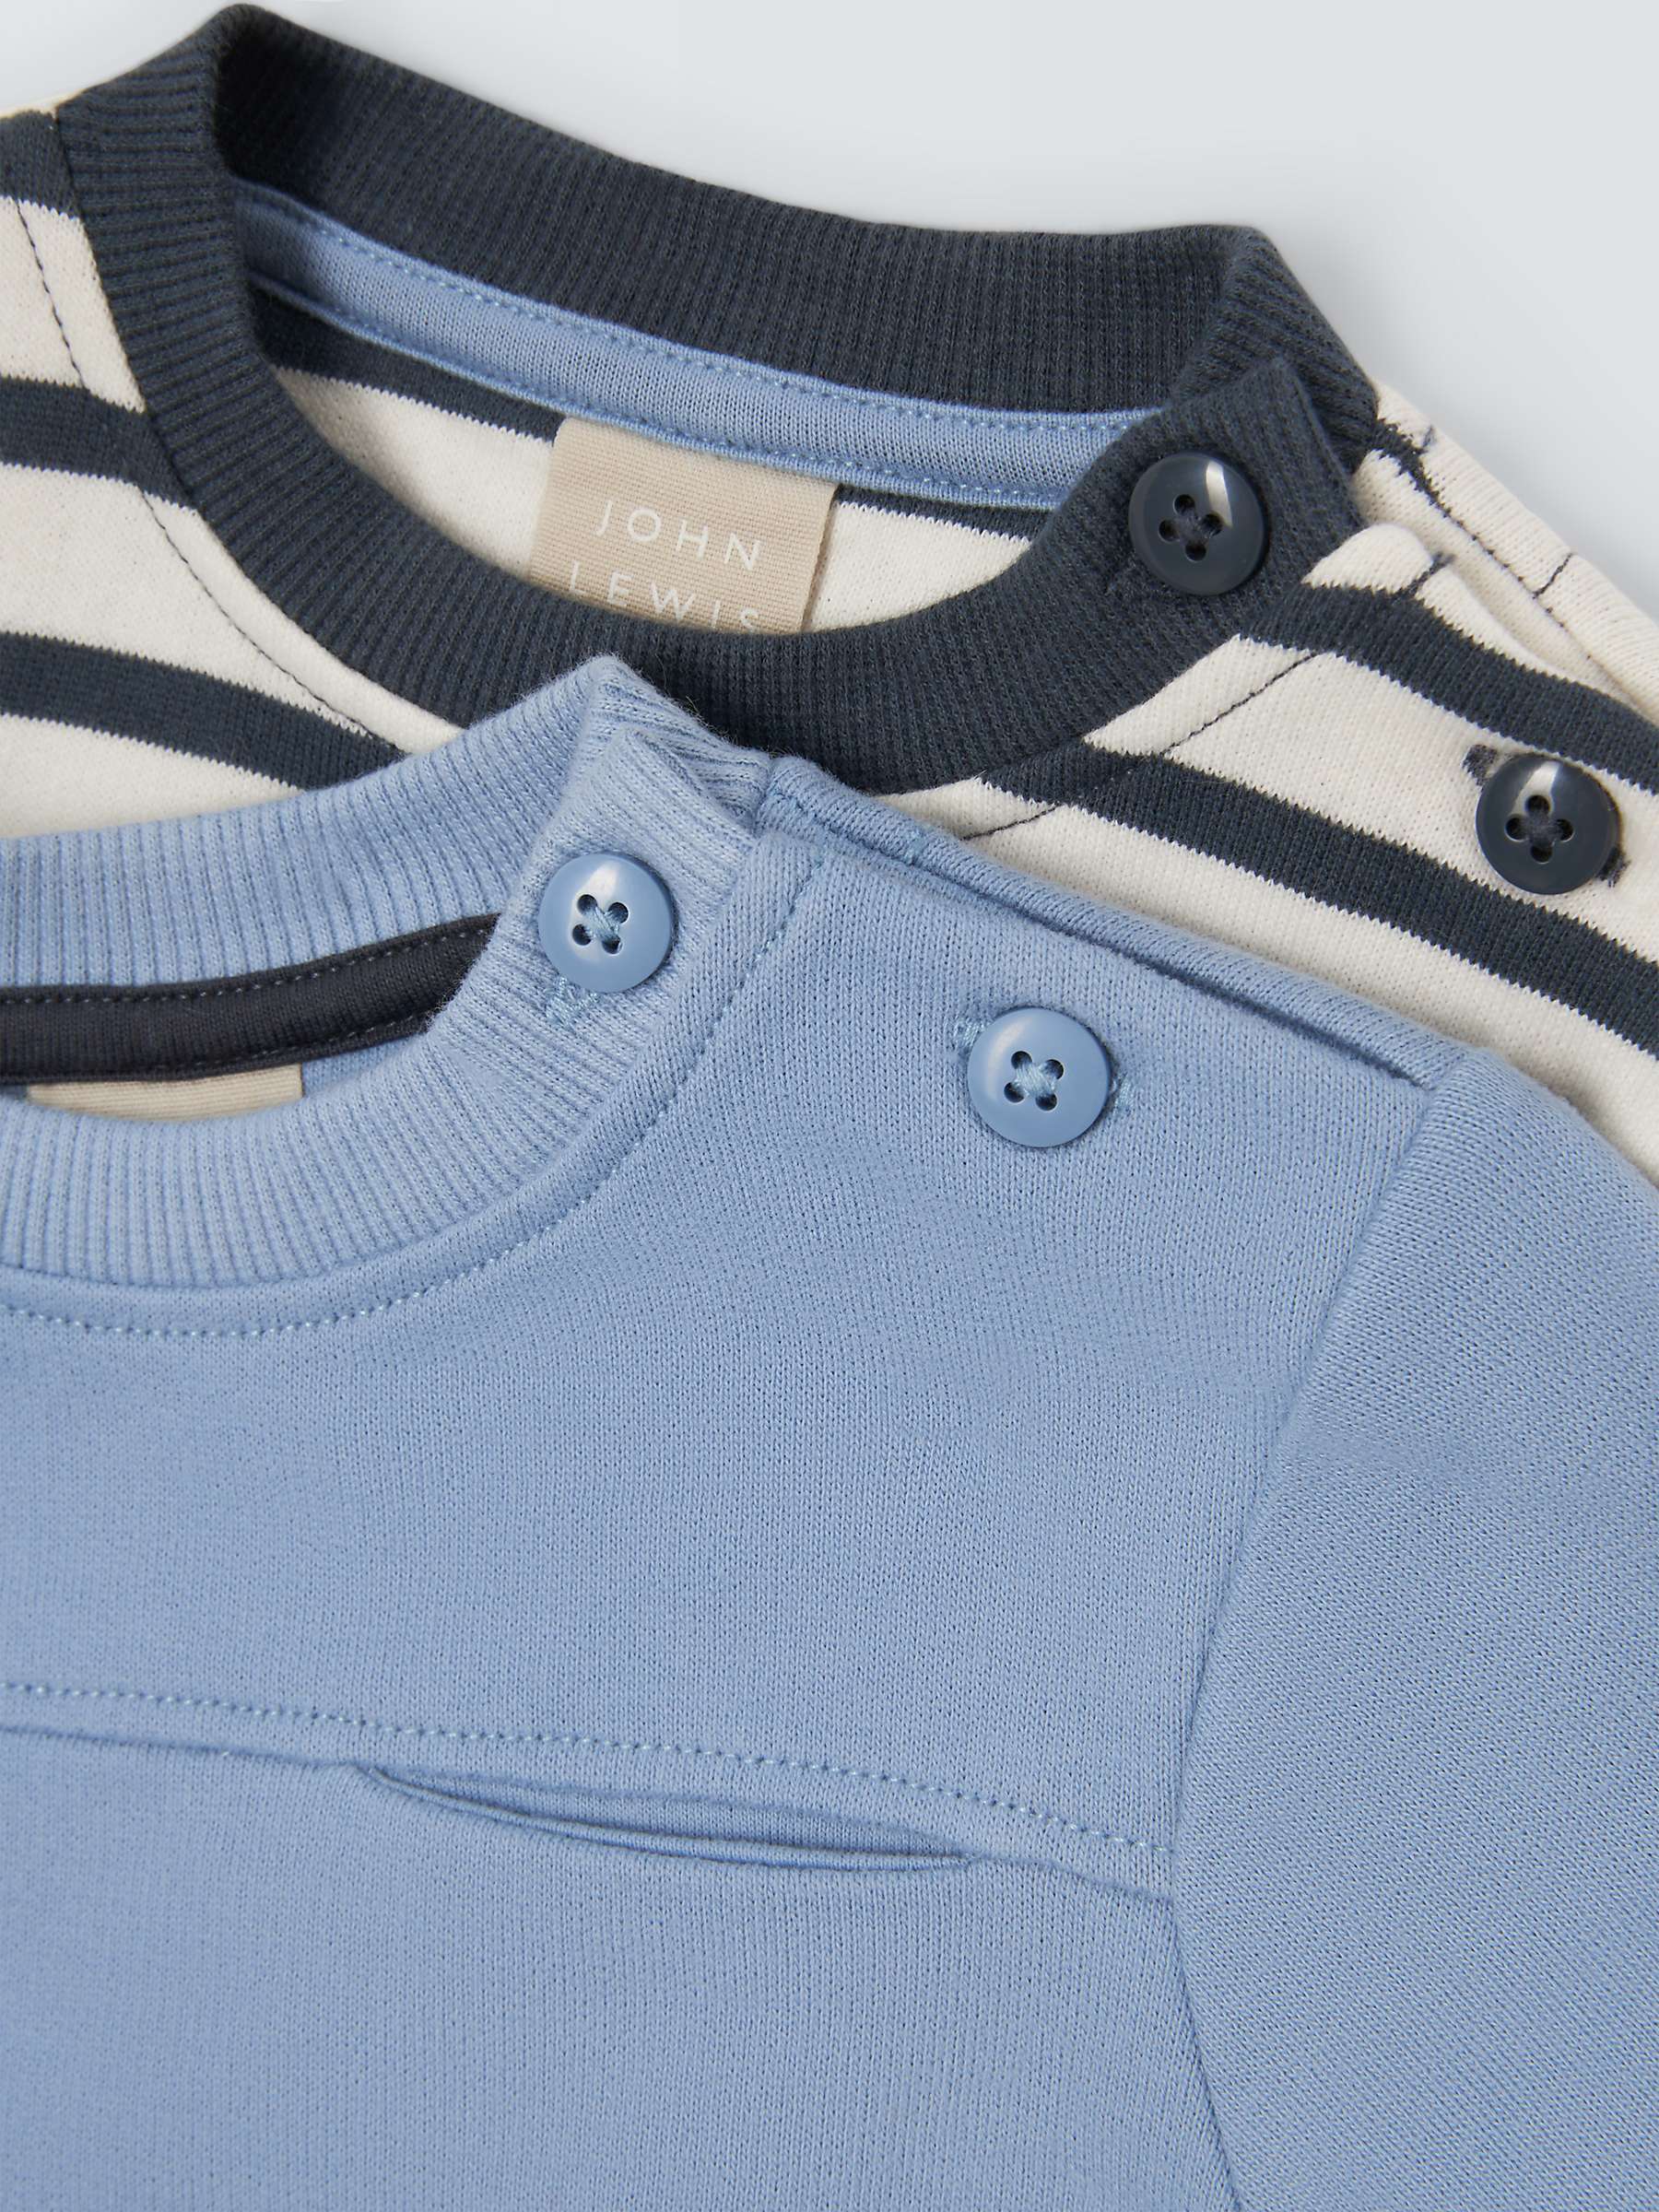 Buy John Lewis Baby Plain & Stripe Sweatshirt, Pack of 2, Blue/Multi Online at johnlewis.com